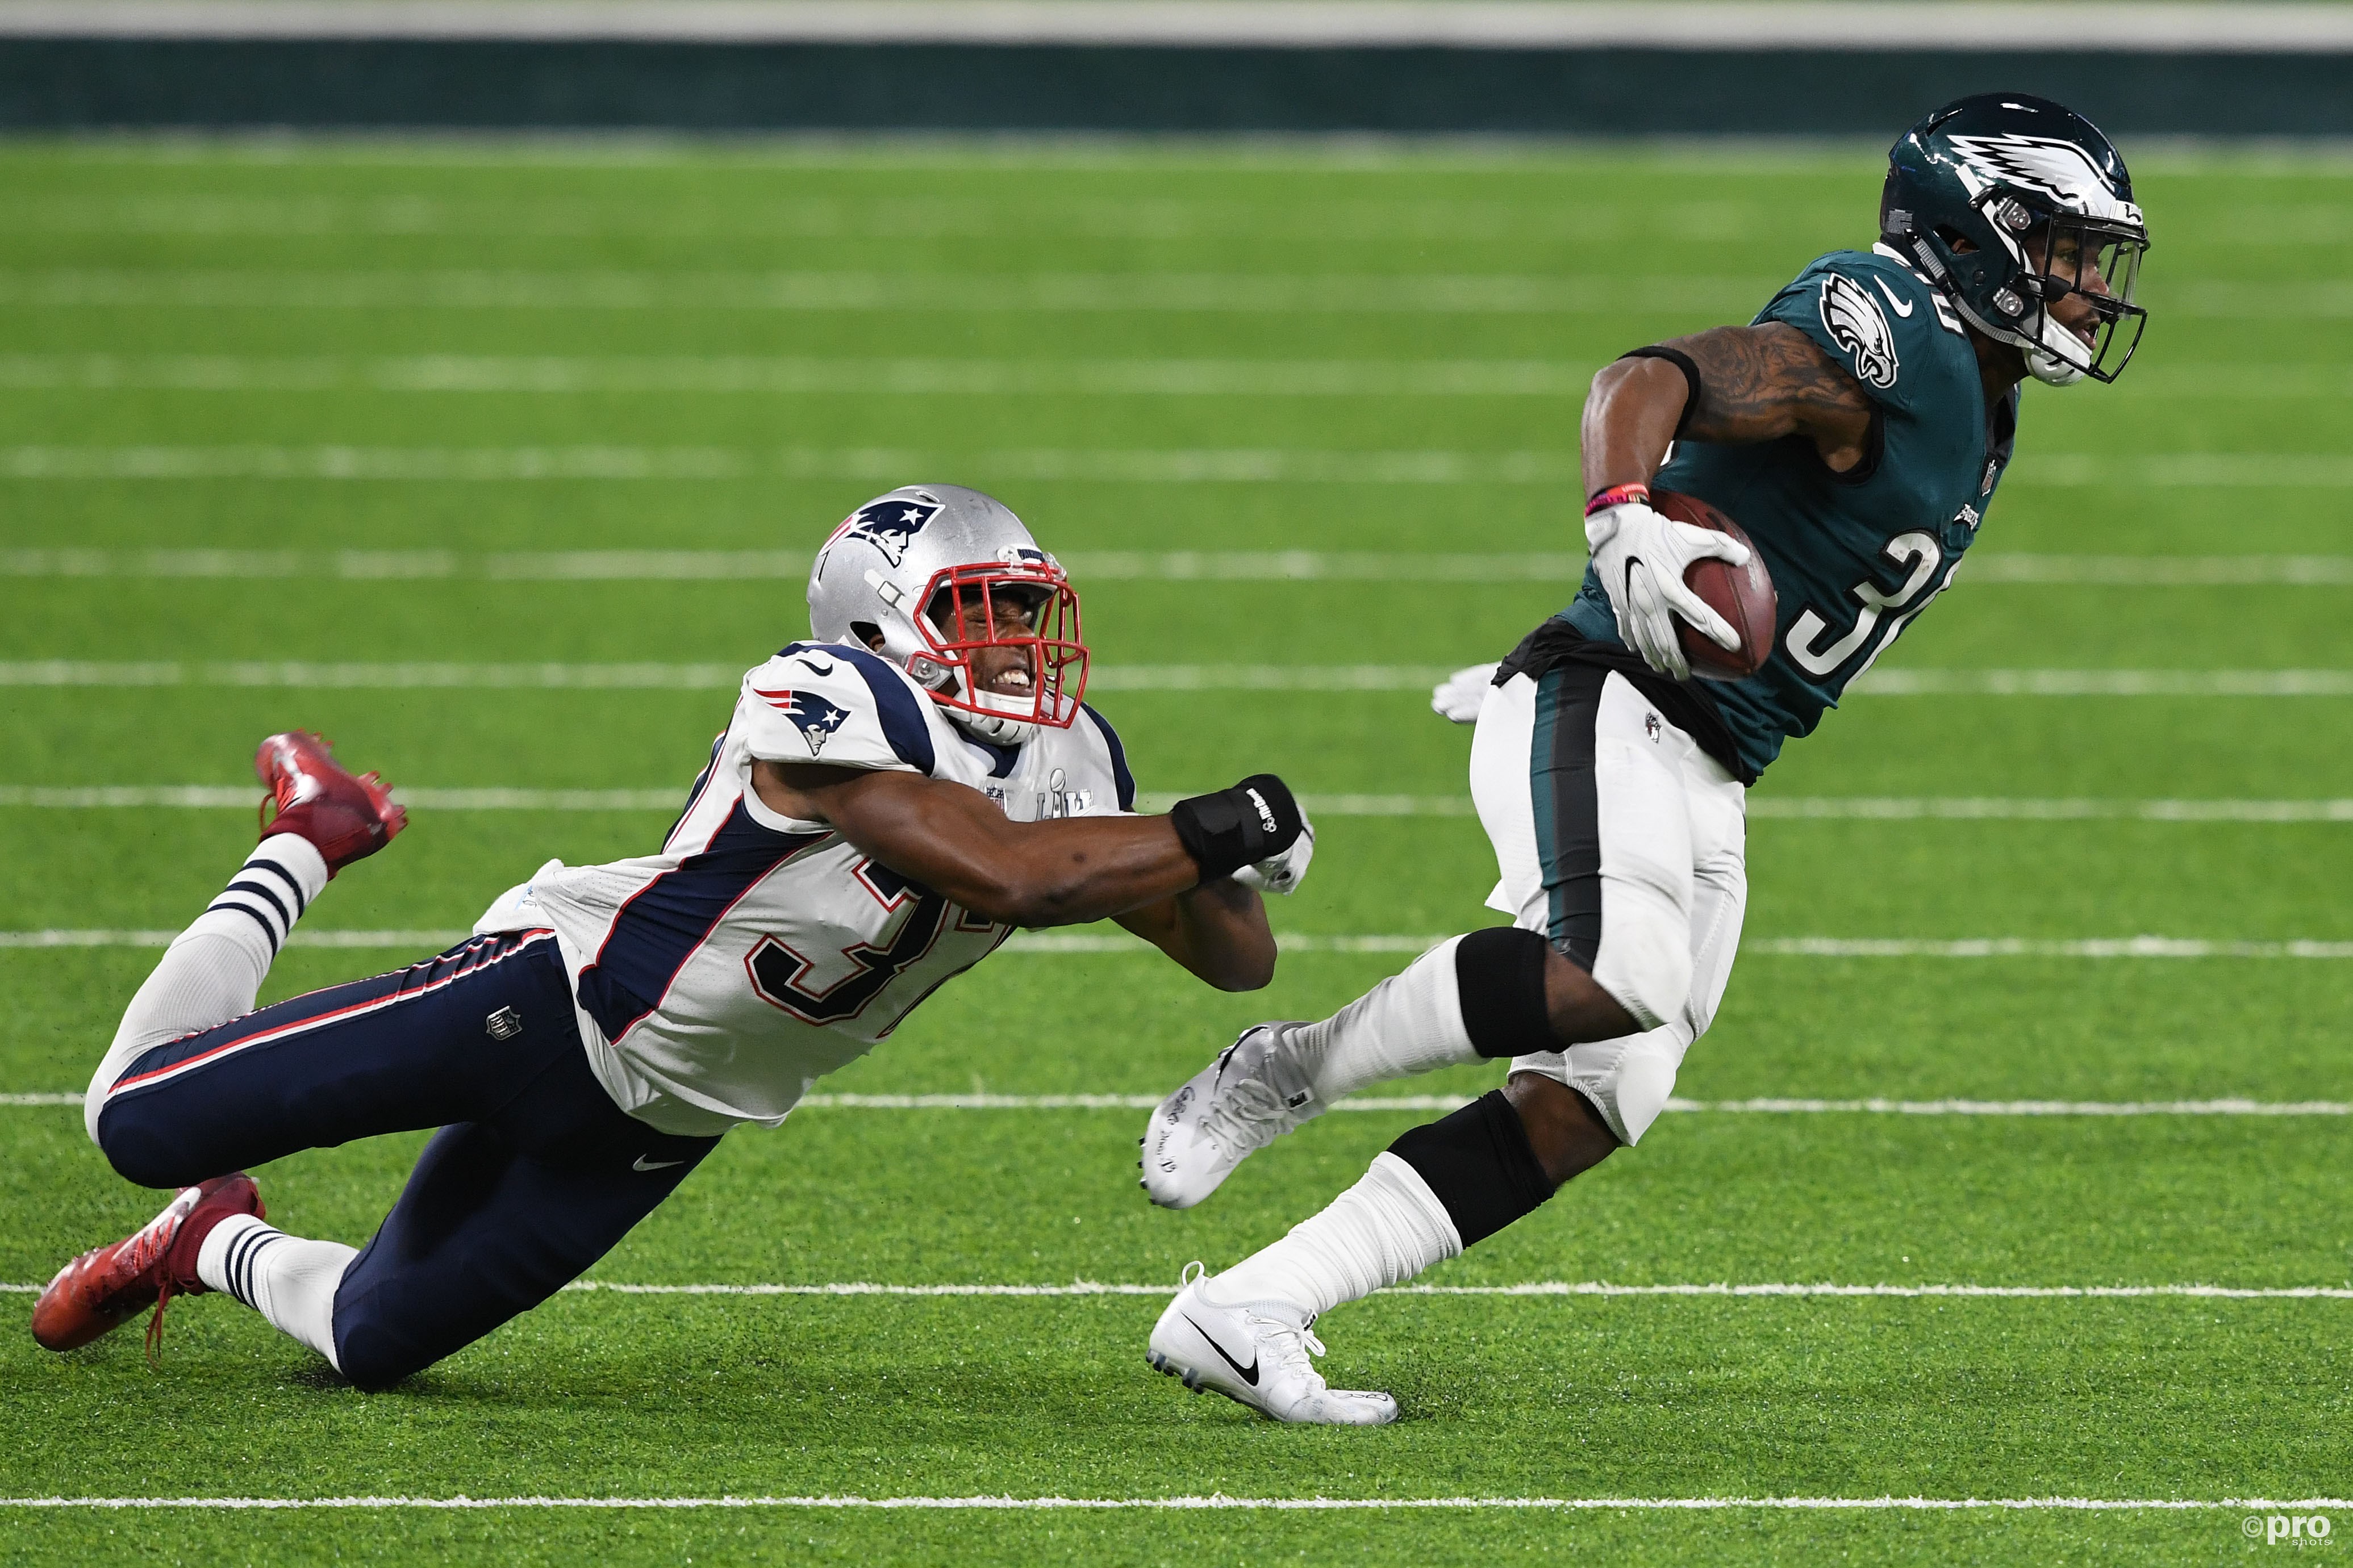 Soms zit de defense ook mis, zoals New England Patriots-strong safety Jordan Richards hier bij Philadelphia Eagles running back Corey Clement (30) (Pro Shots / Action Images)